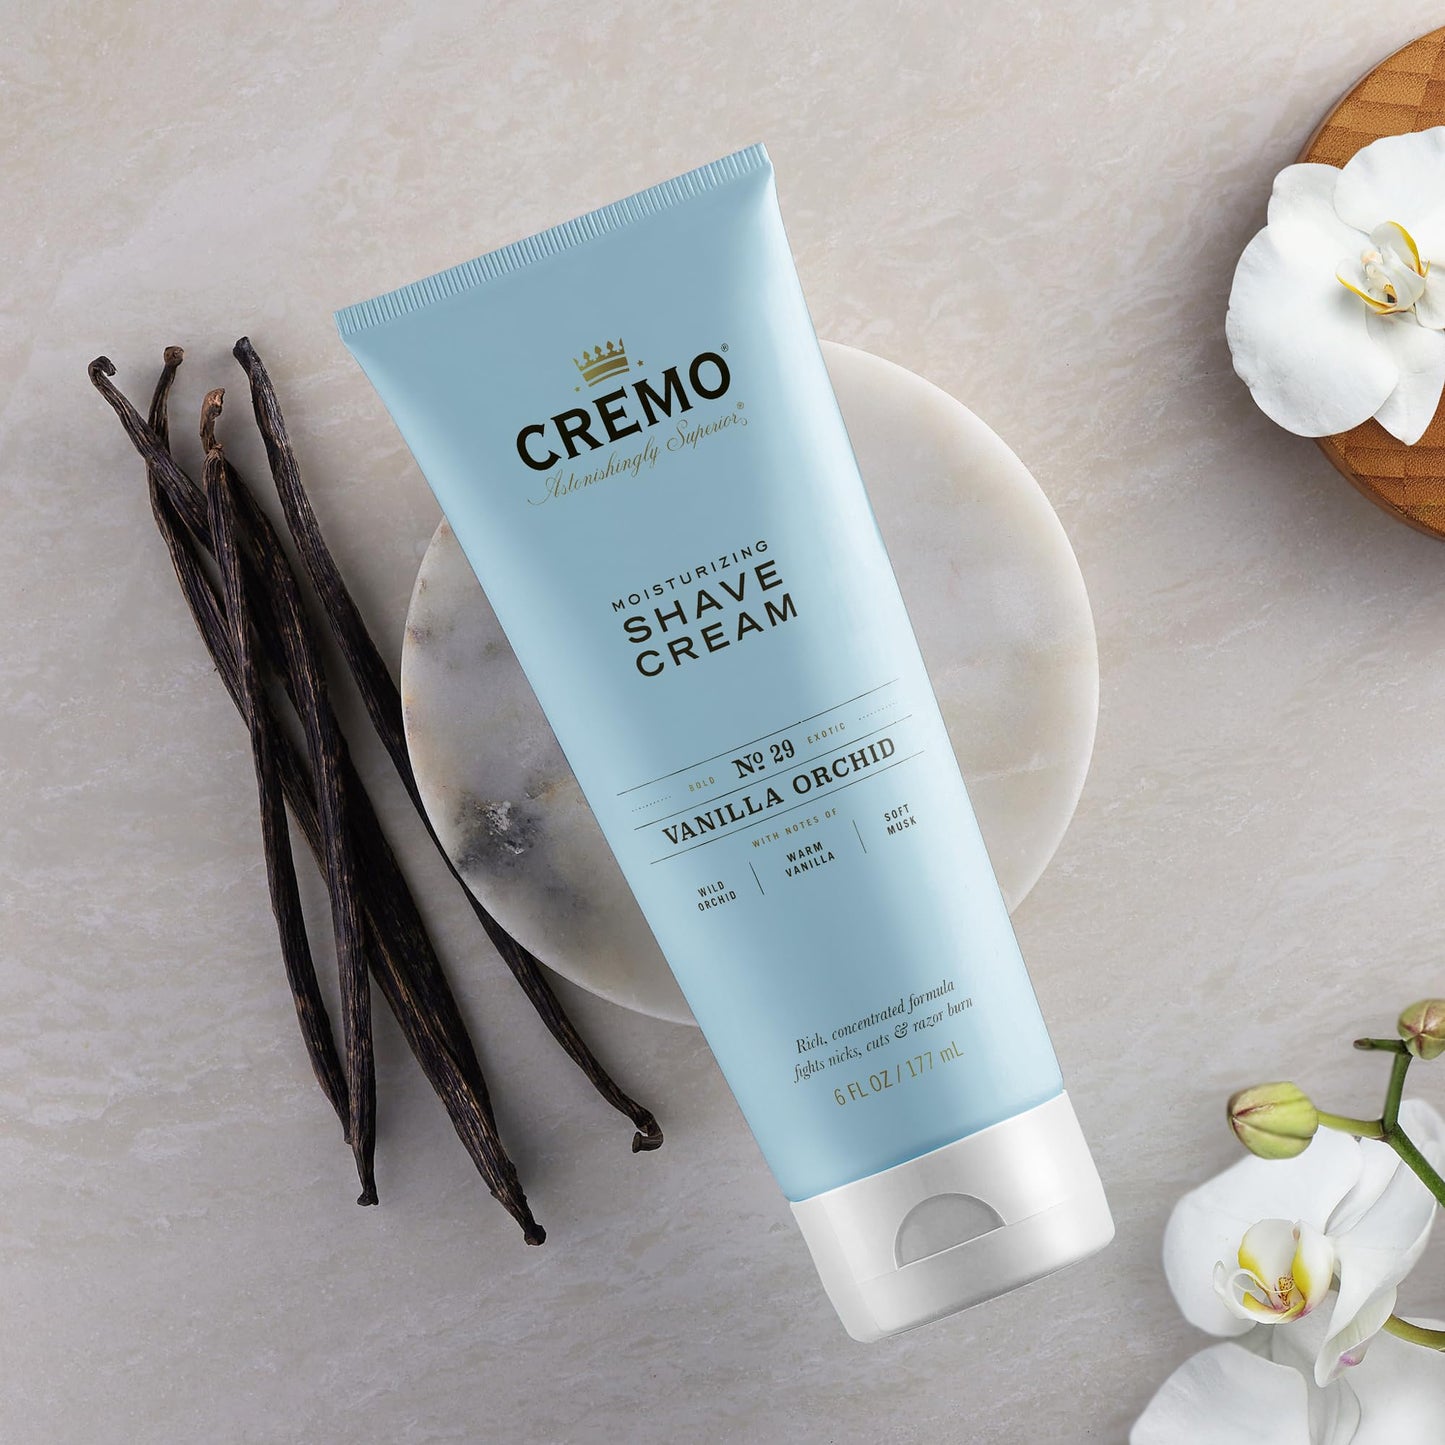 Cremo Vanilla and Orchid Moisturizing Shave Cream, Astonishingly Superior Ultra-Slick Shaving Cream for Women Fights Nicks, Cuts and Razor Burn, 6 Fl Oz (2 Pack)